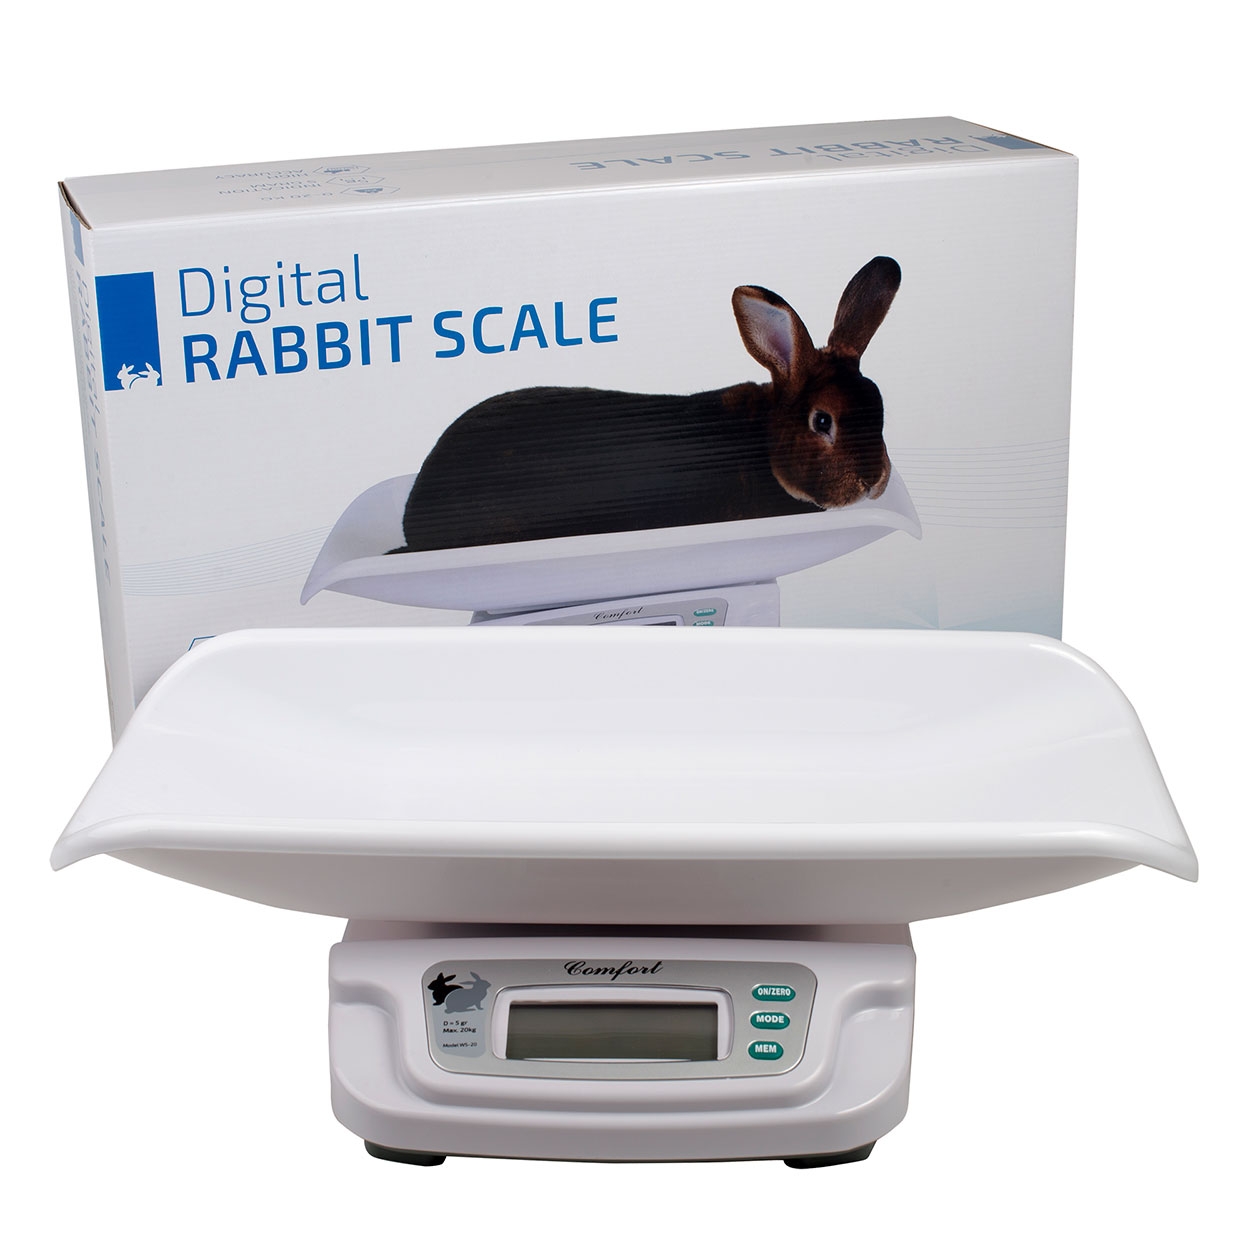 Digital rabbit scale max. 20kg, Miscellaneous, Rabbits